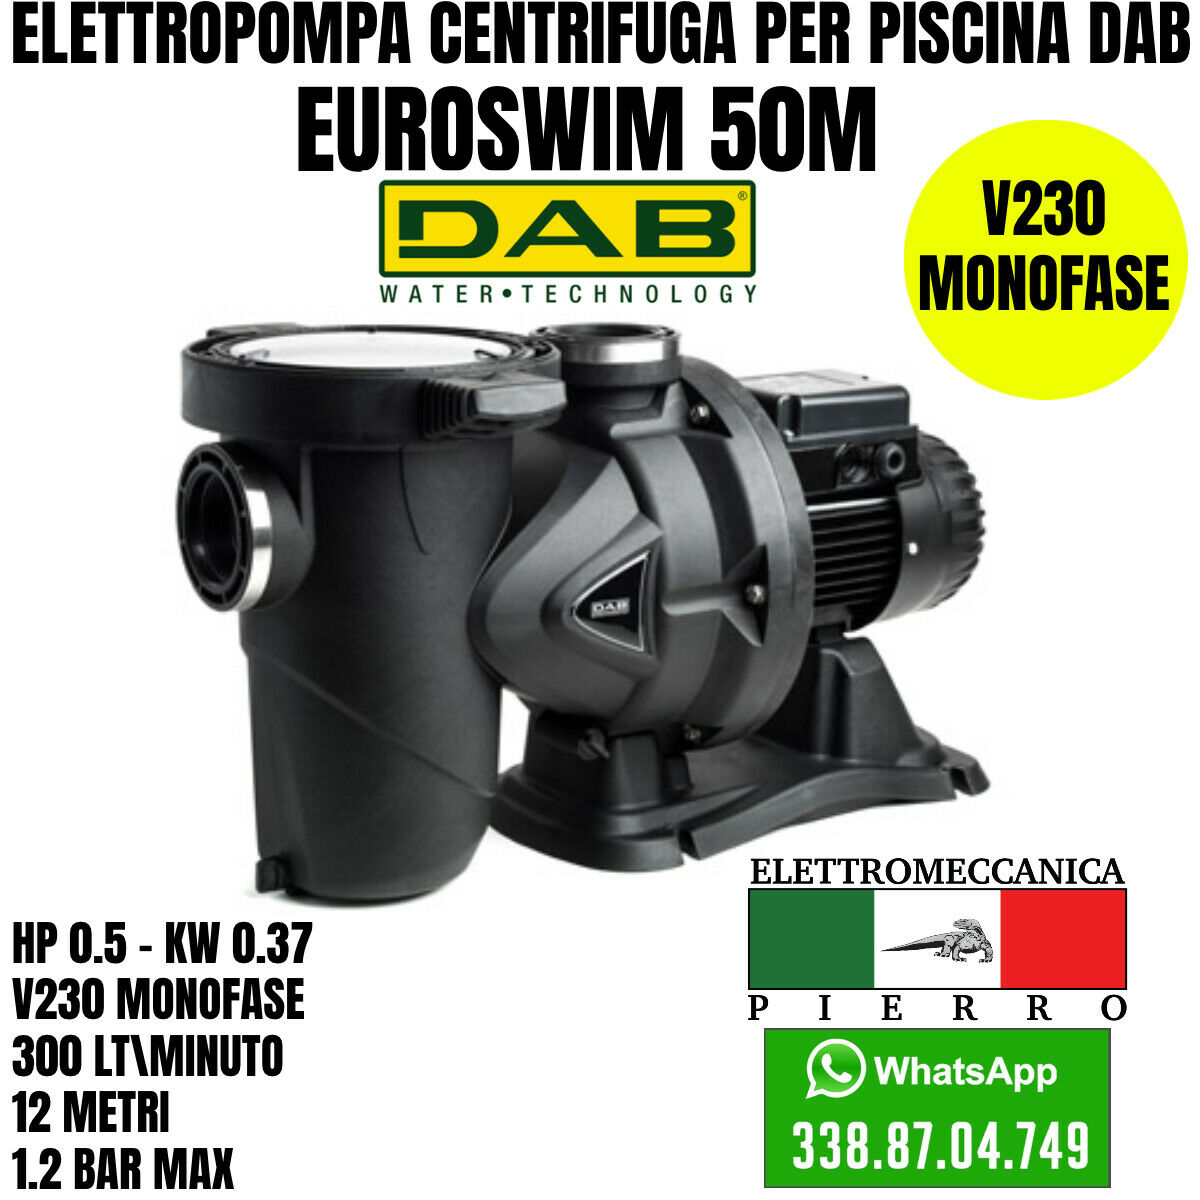 Pompa per piscina DAB EuroSwim EuroPro Elettropompa centrifuga piscine HP 0/3 Logo Elettromeccanica Pierro Elettromeccanica Express Assistenza EuroSwim 50M Hp 0,5 - KW 0.37 400LT/Minuto 12 Metri 1,2 BAR MAX V230